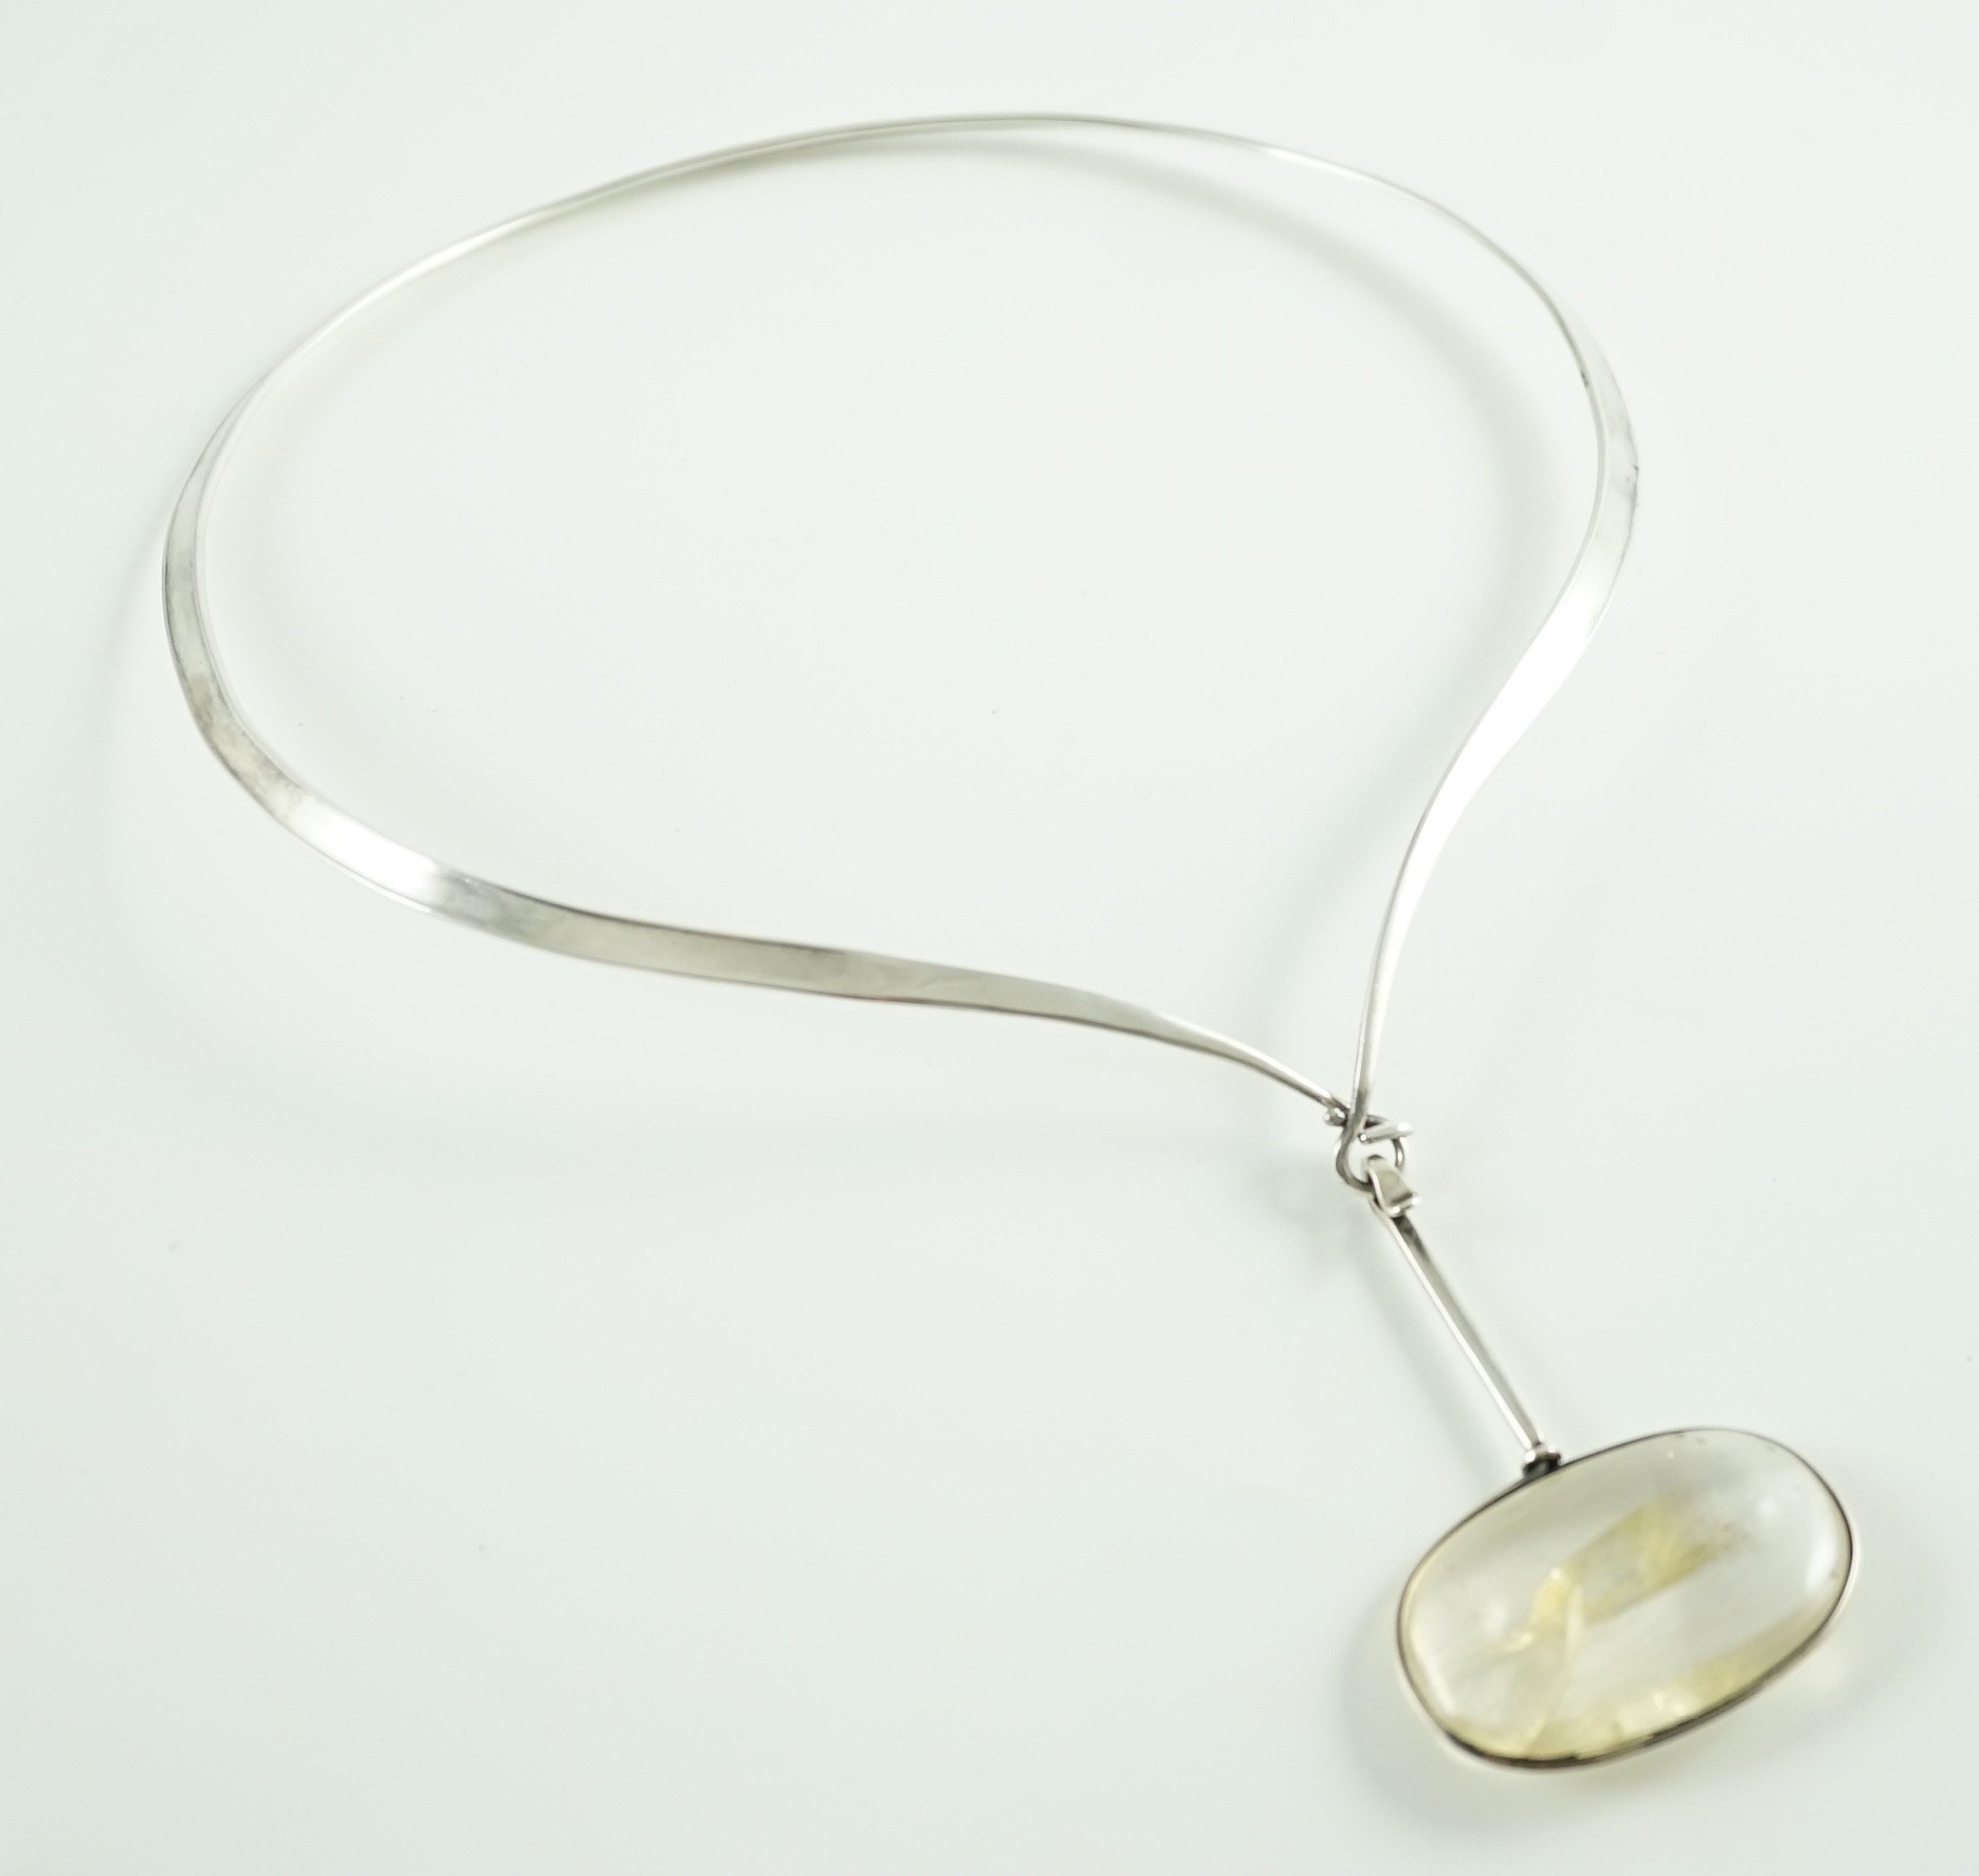 A Vivienne Torun for Georg Jensen Danish sterling silver and rutilated oval quartz set pendant - Image 3 of 4